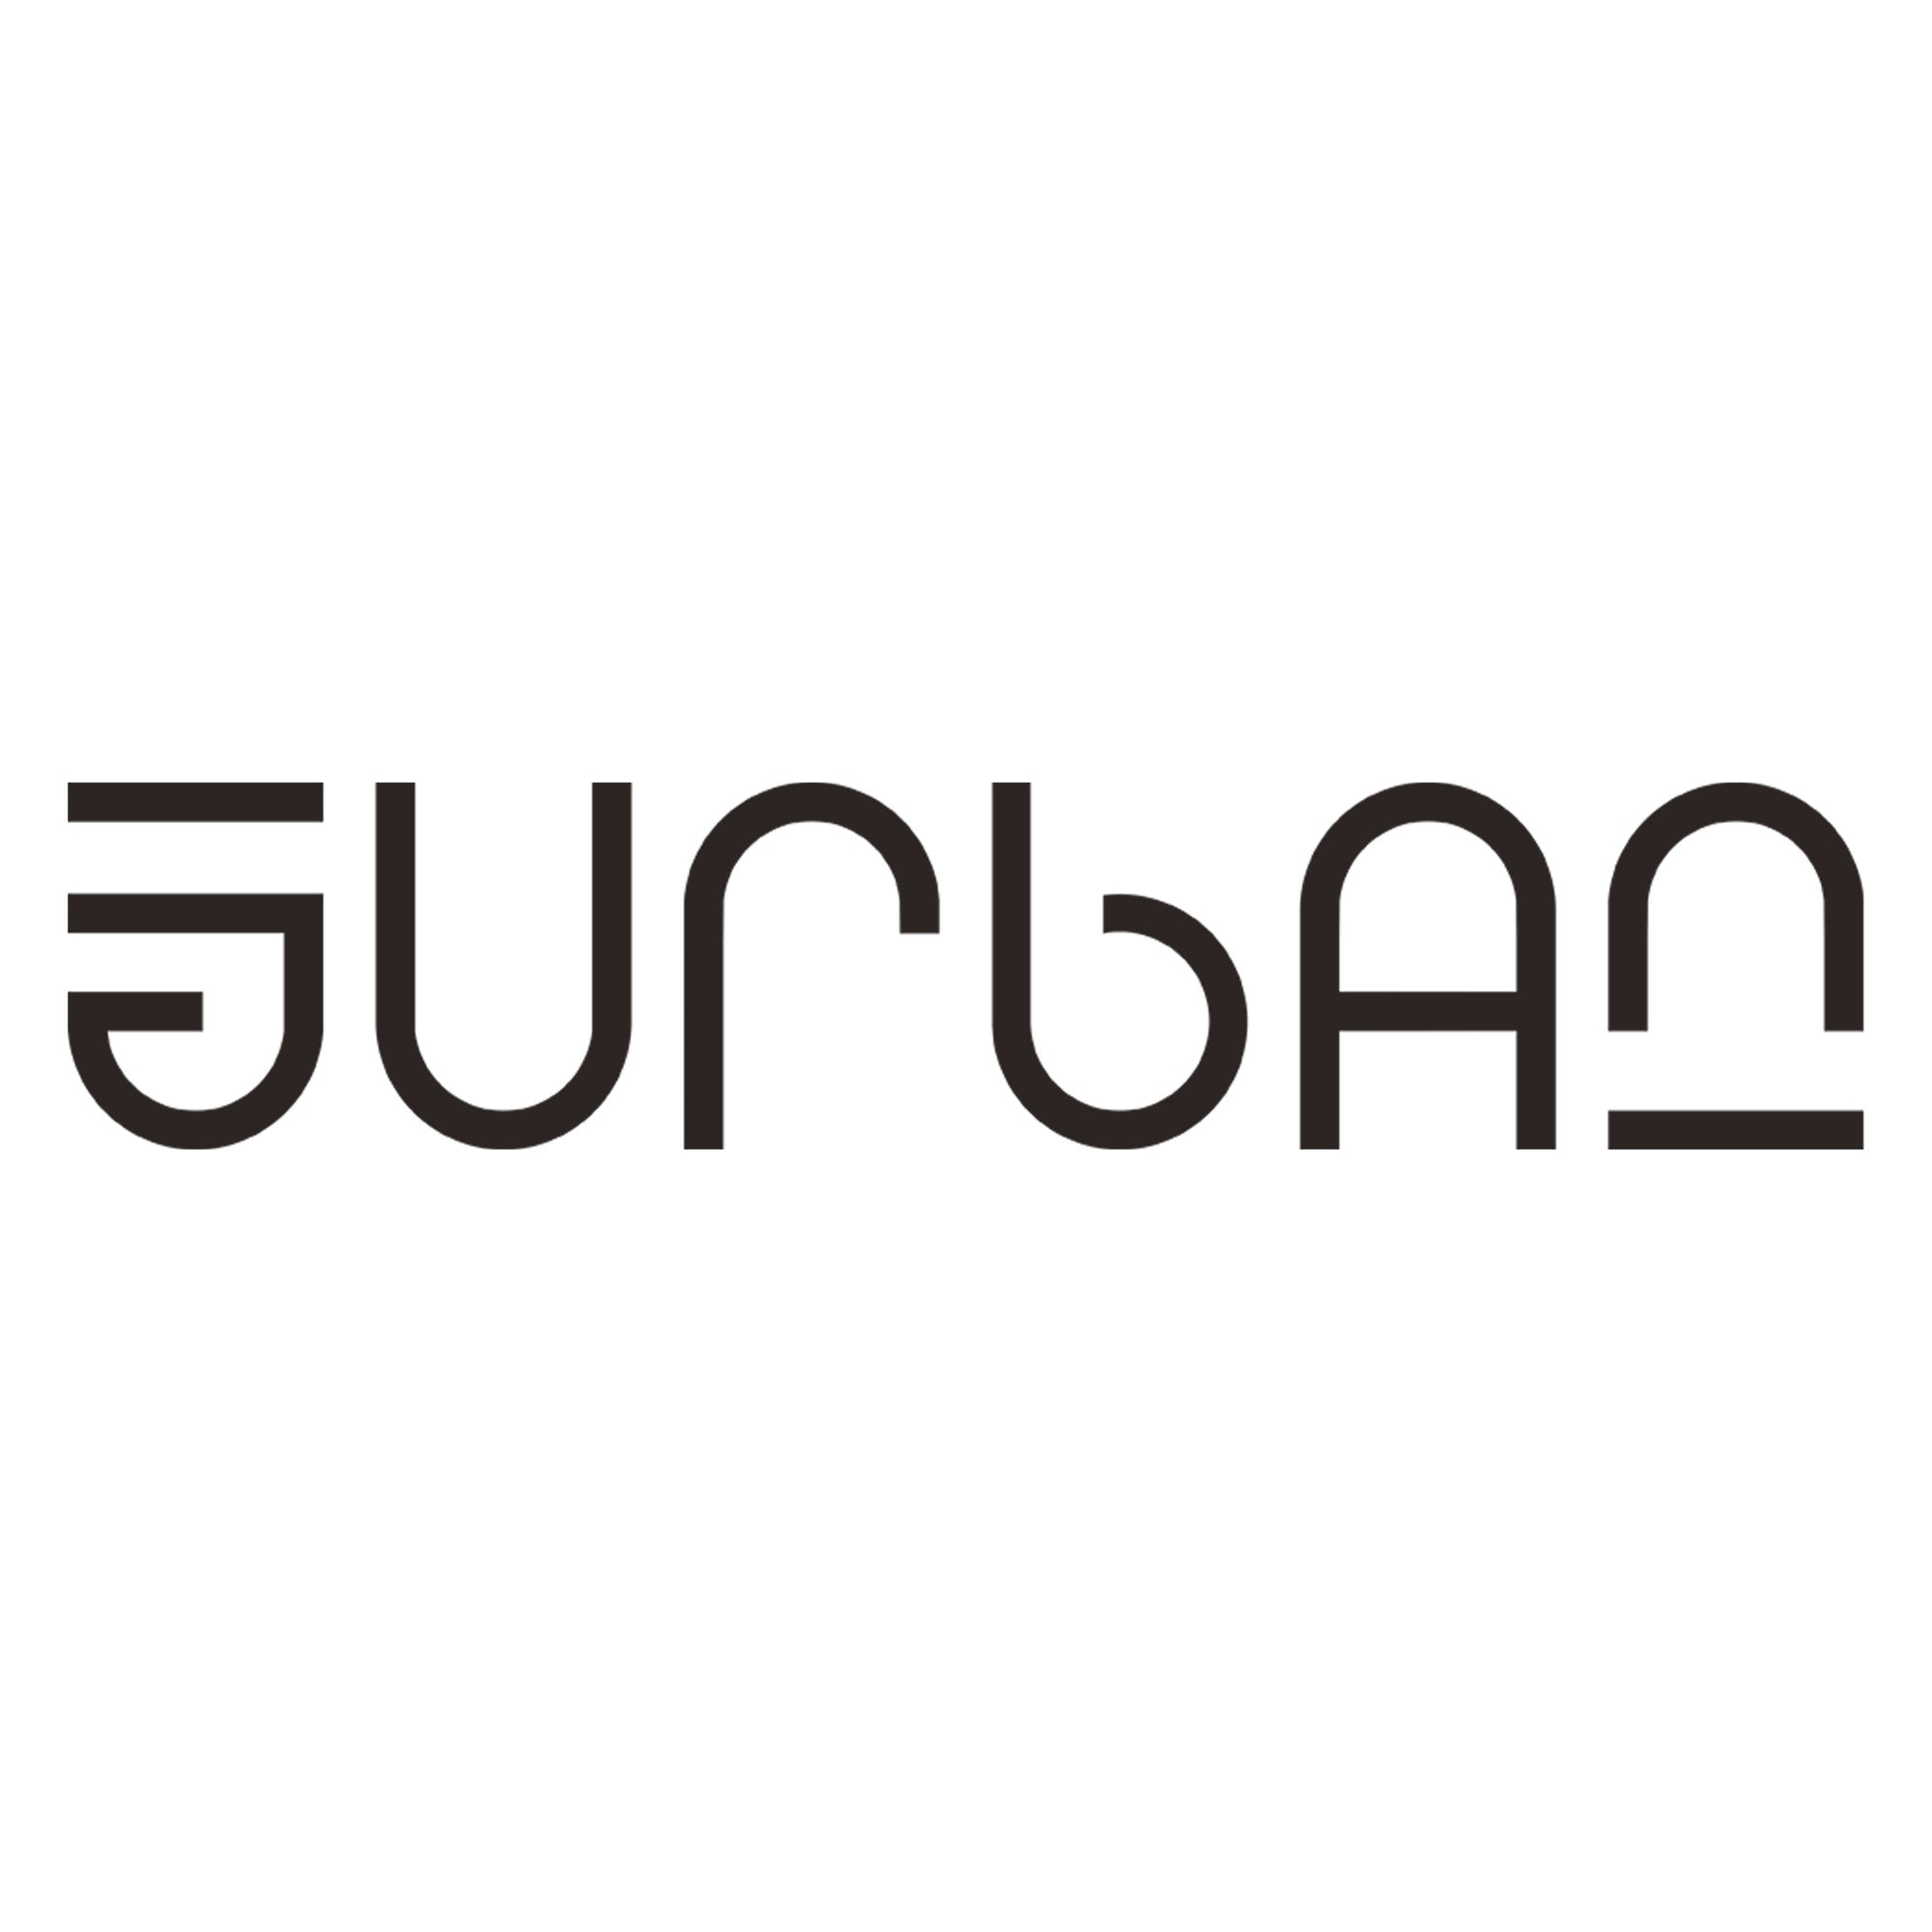 Jurban Wear logo